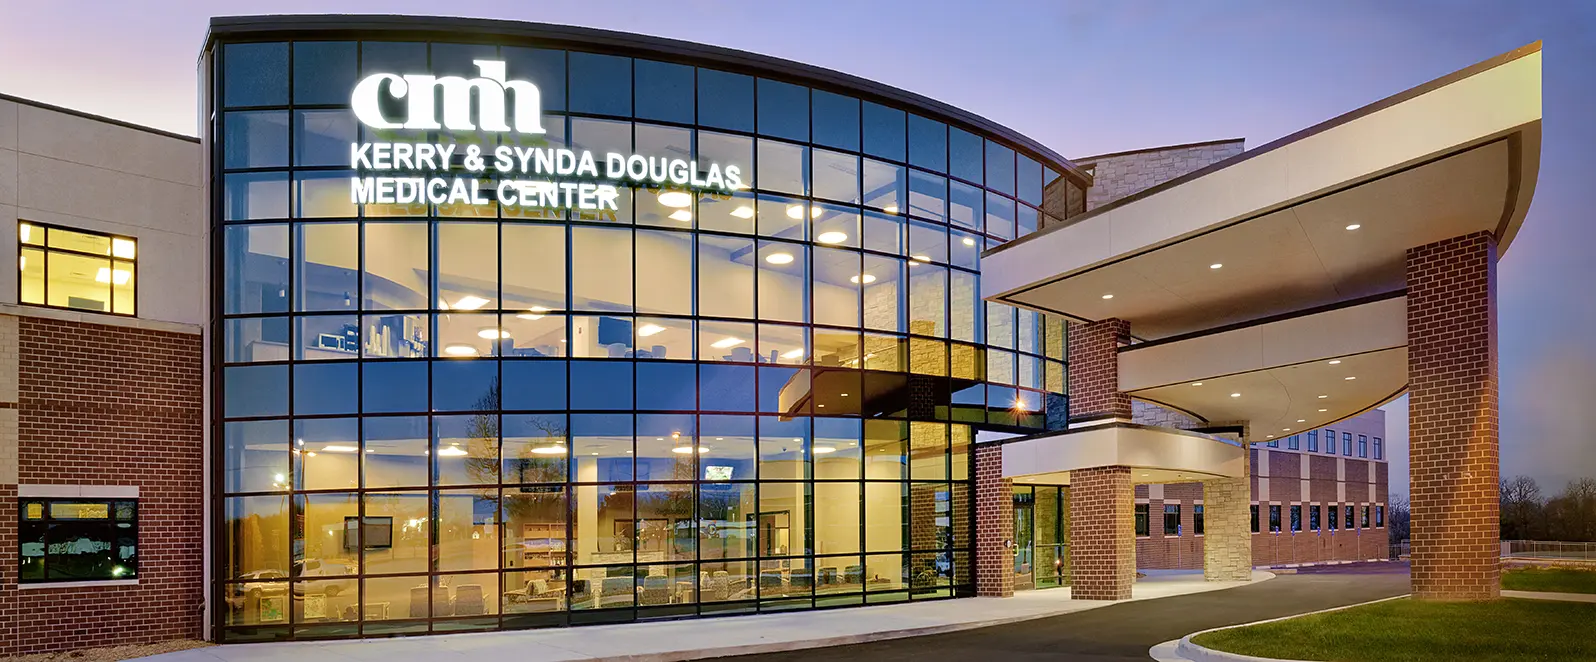 CMH Podiatry Clinic at Douglas Medical Center building exterior